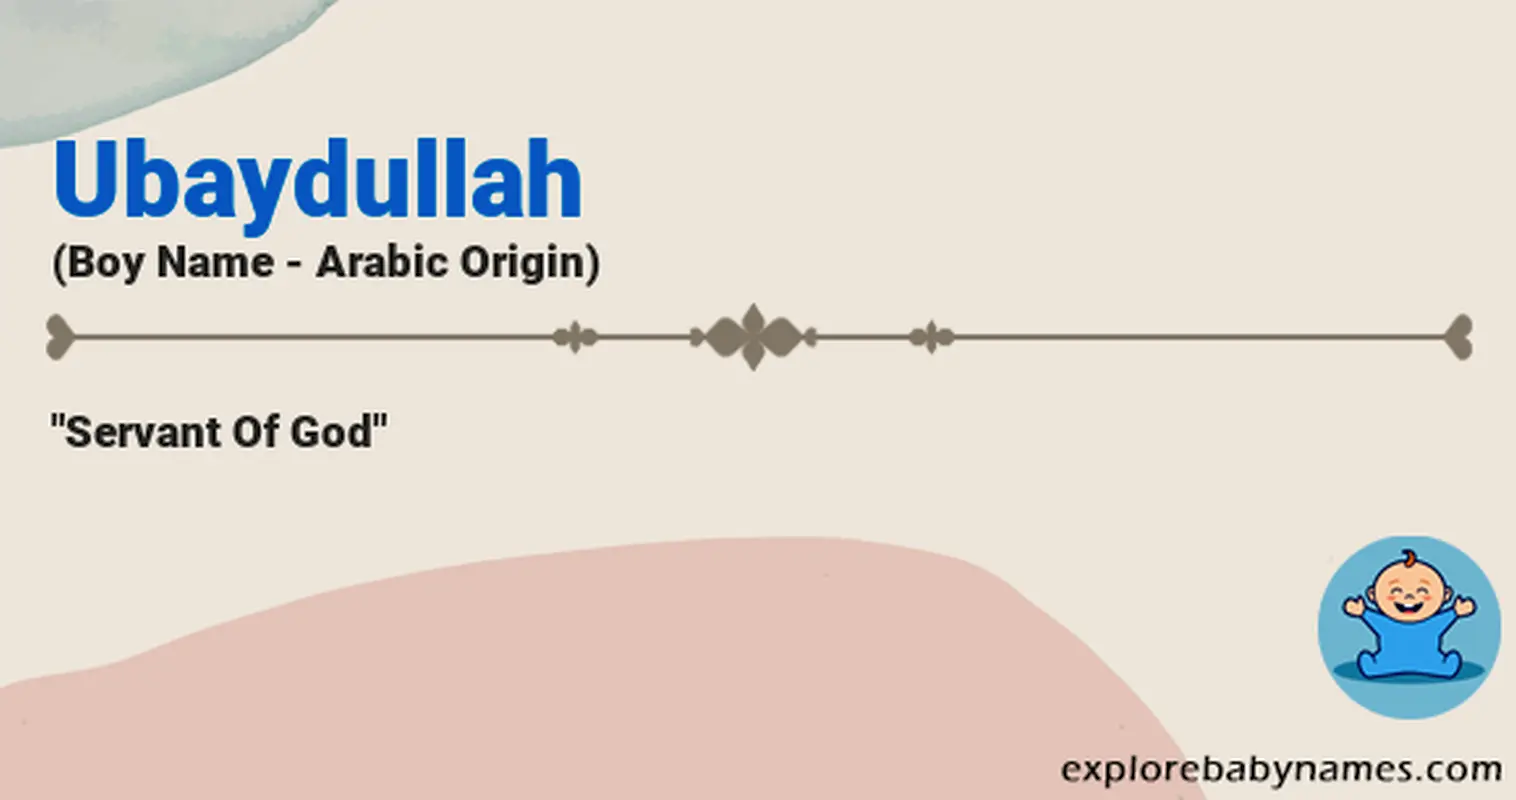 Meaning of Ubaydullah